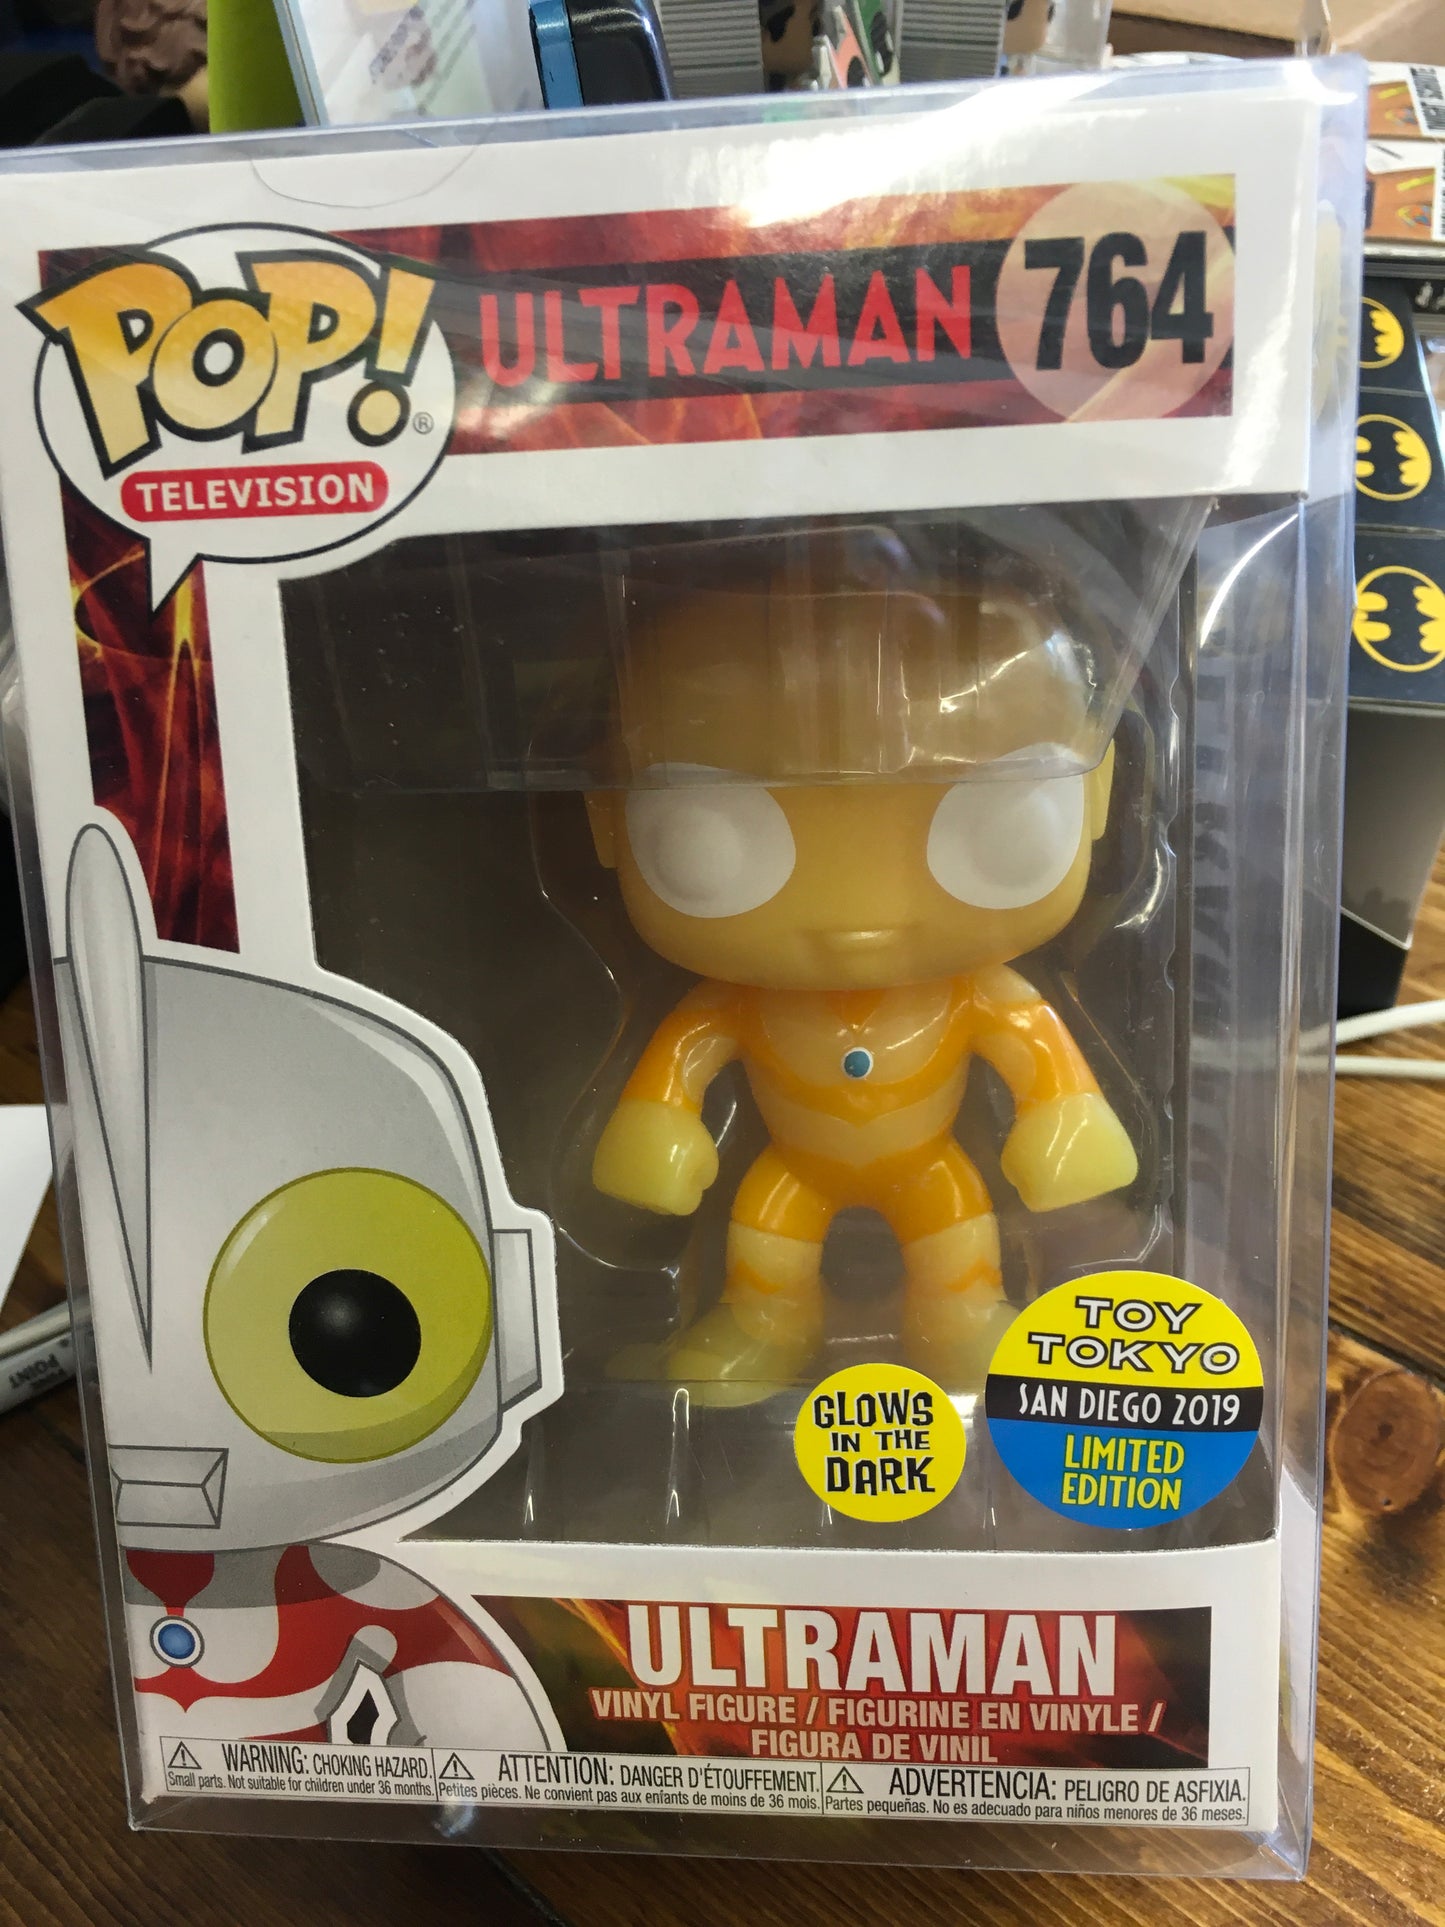 Ultraman exclusive 764 Funko Pop! vinyl figure Television